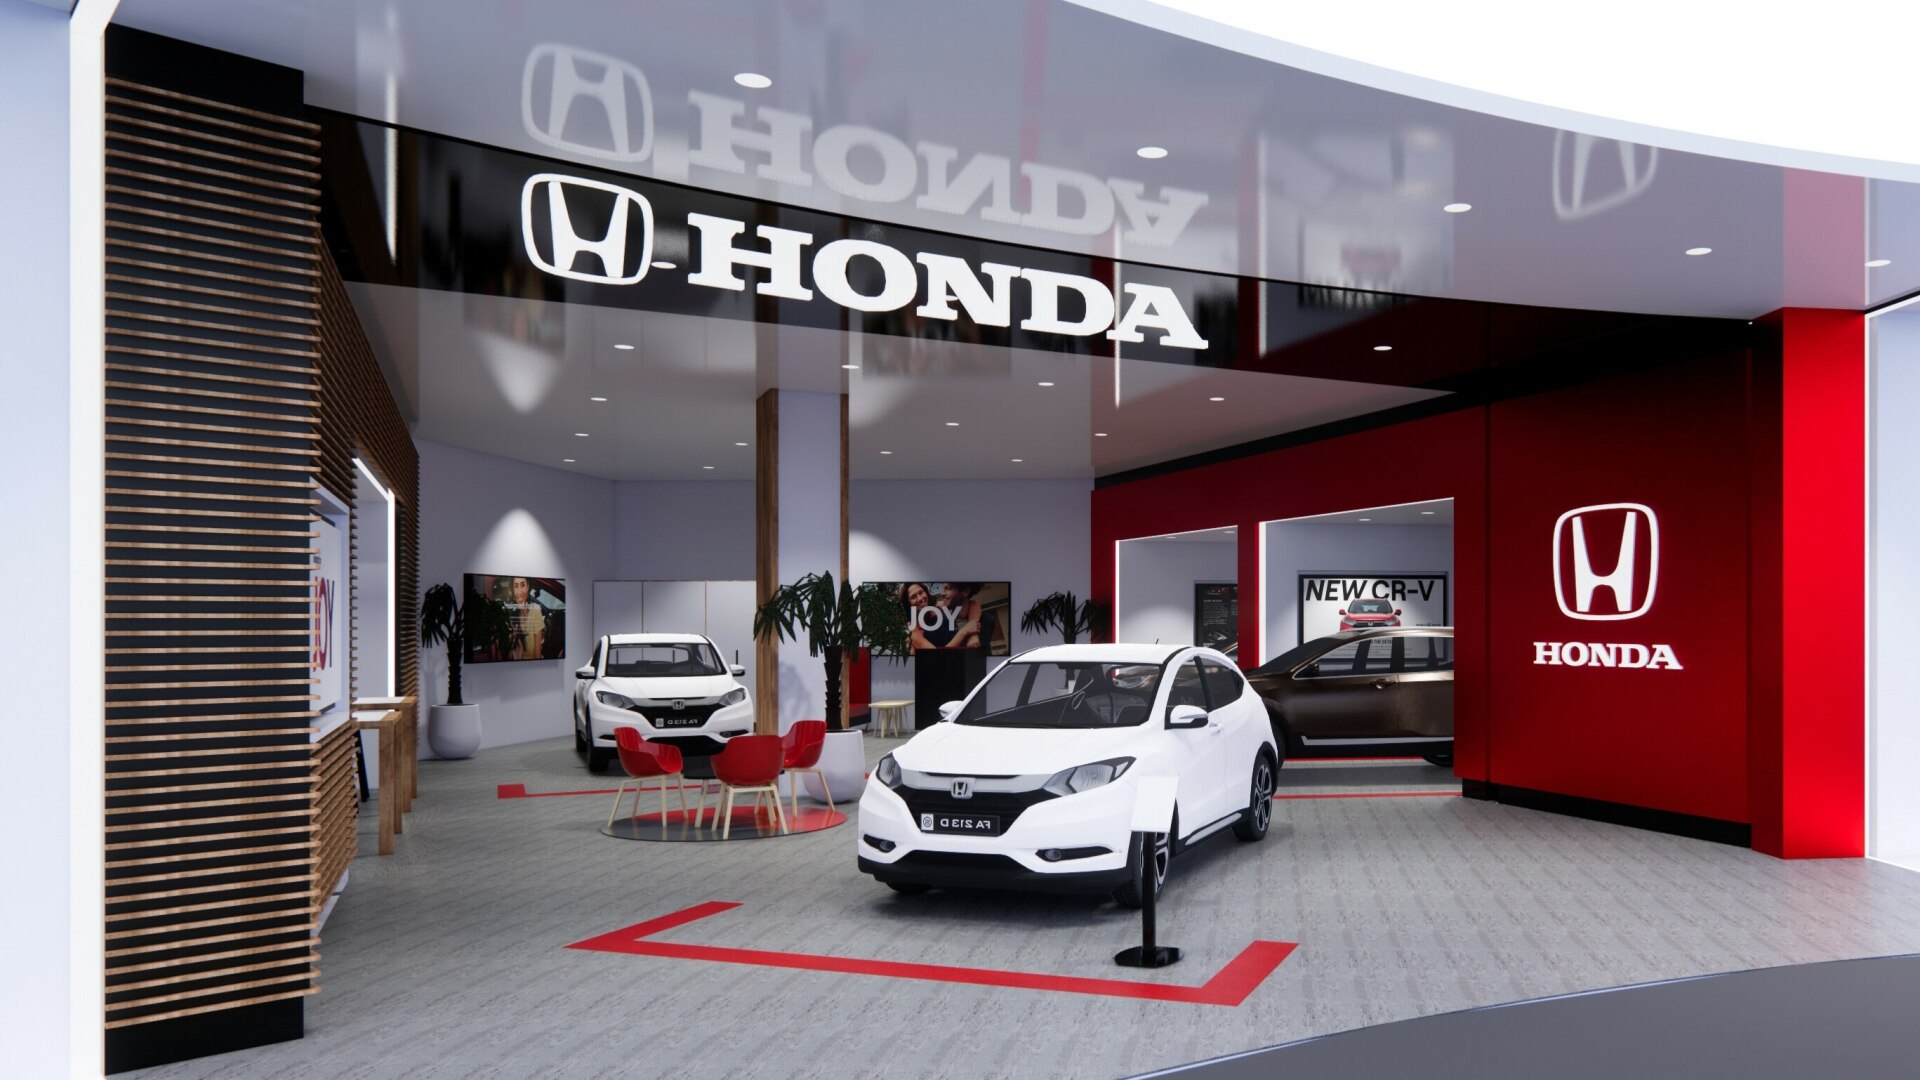 A Honda Retail Center In Moonee Ponds, Victoria, Australia (Credits)